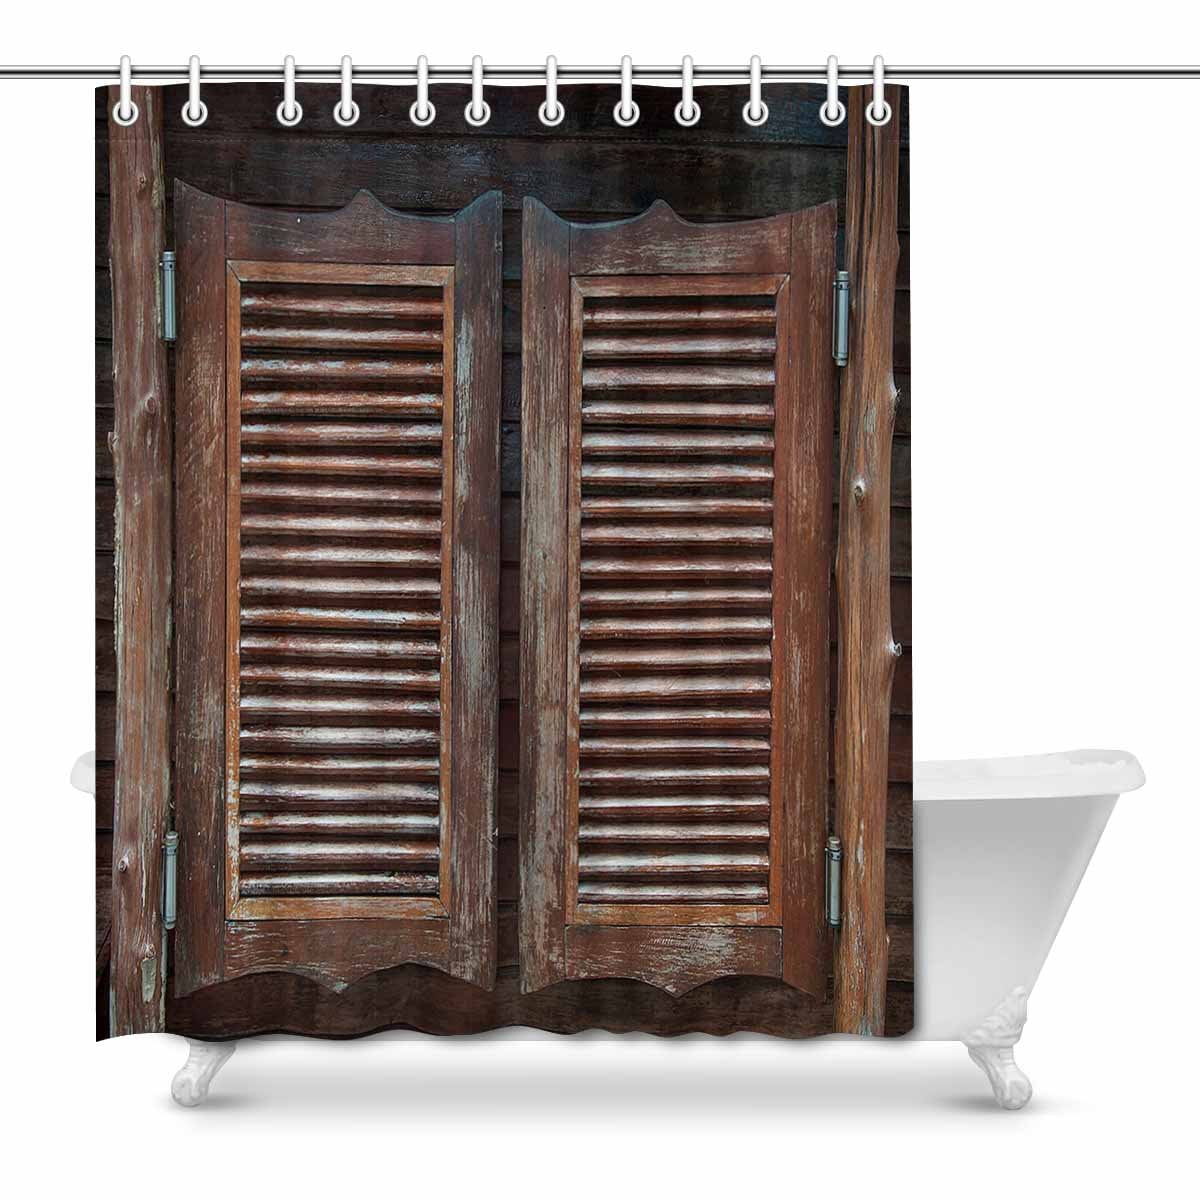 Western Cowboy Bar Shower Curtain Hooks Set Bathroom Waterproof Fabric 72 Inches 